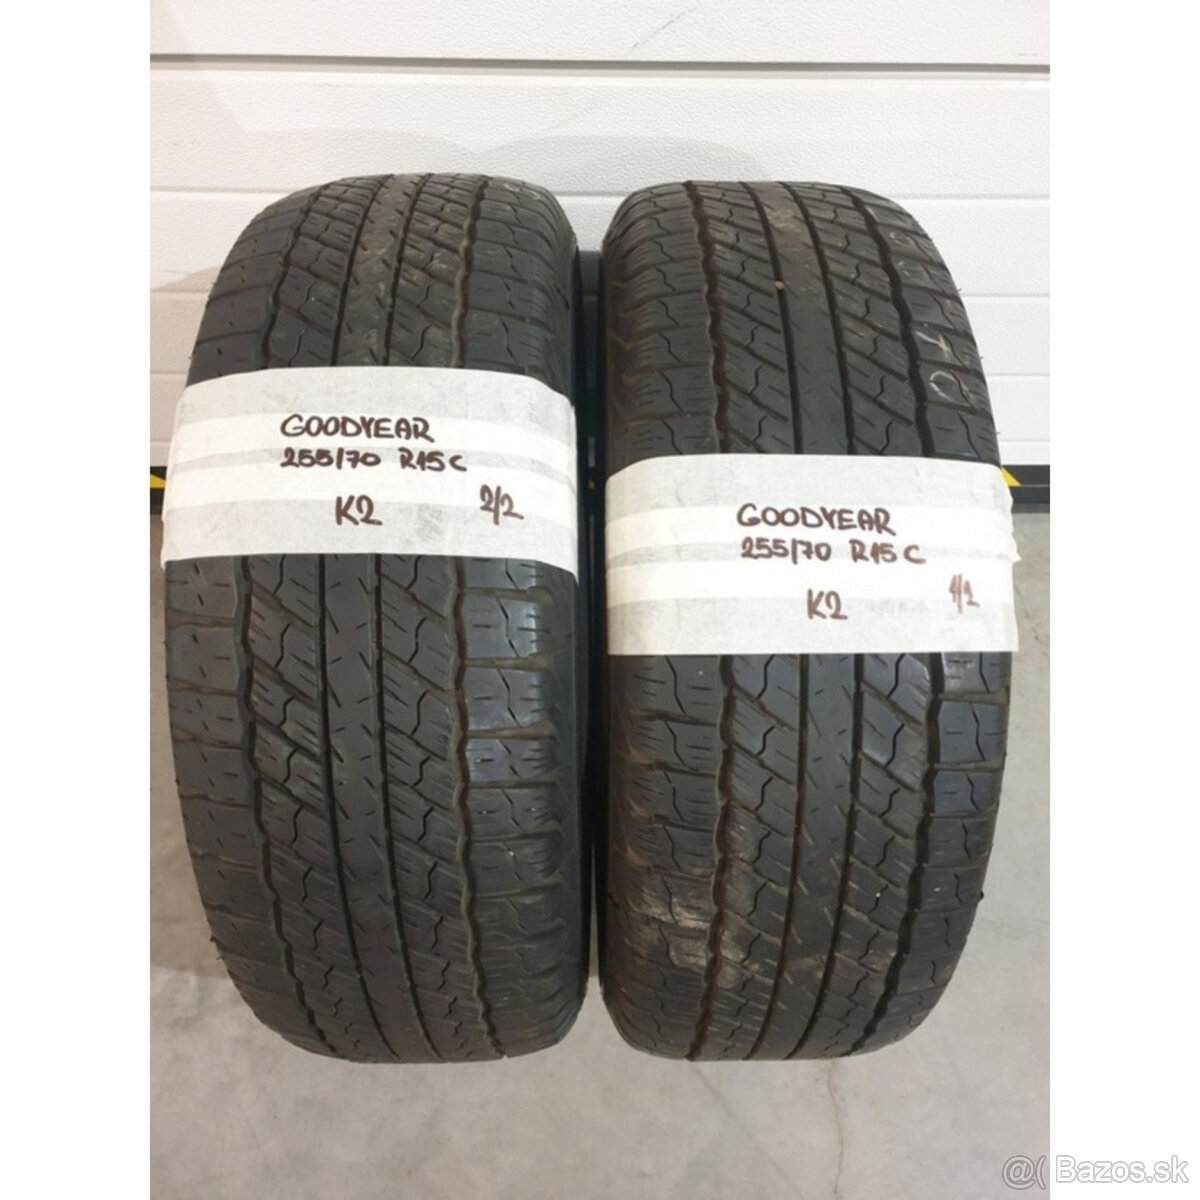 Dodávkové pneumatiky 255/70 R15C GOODYEAR